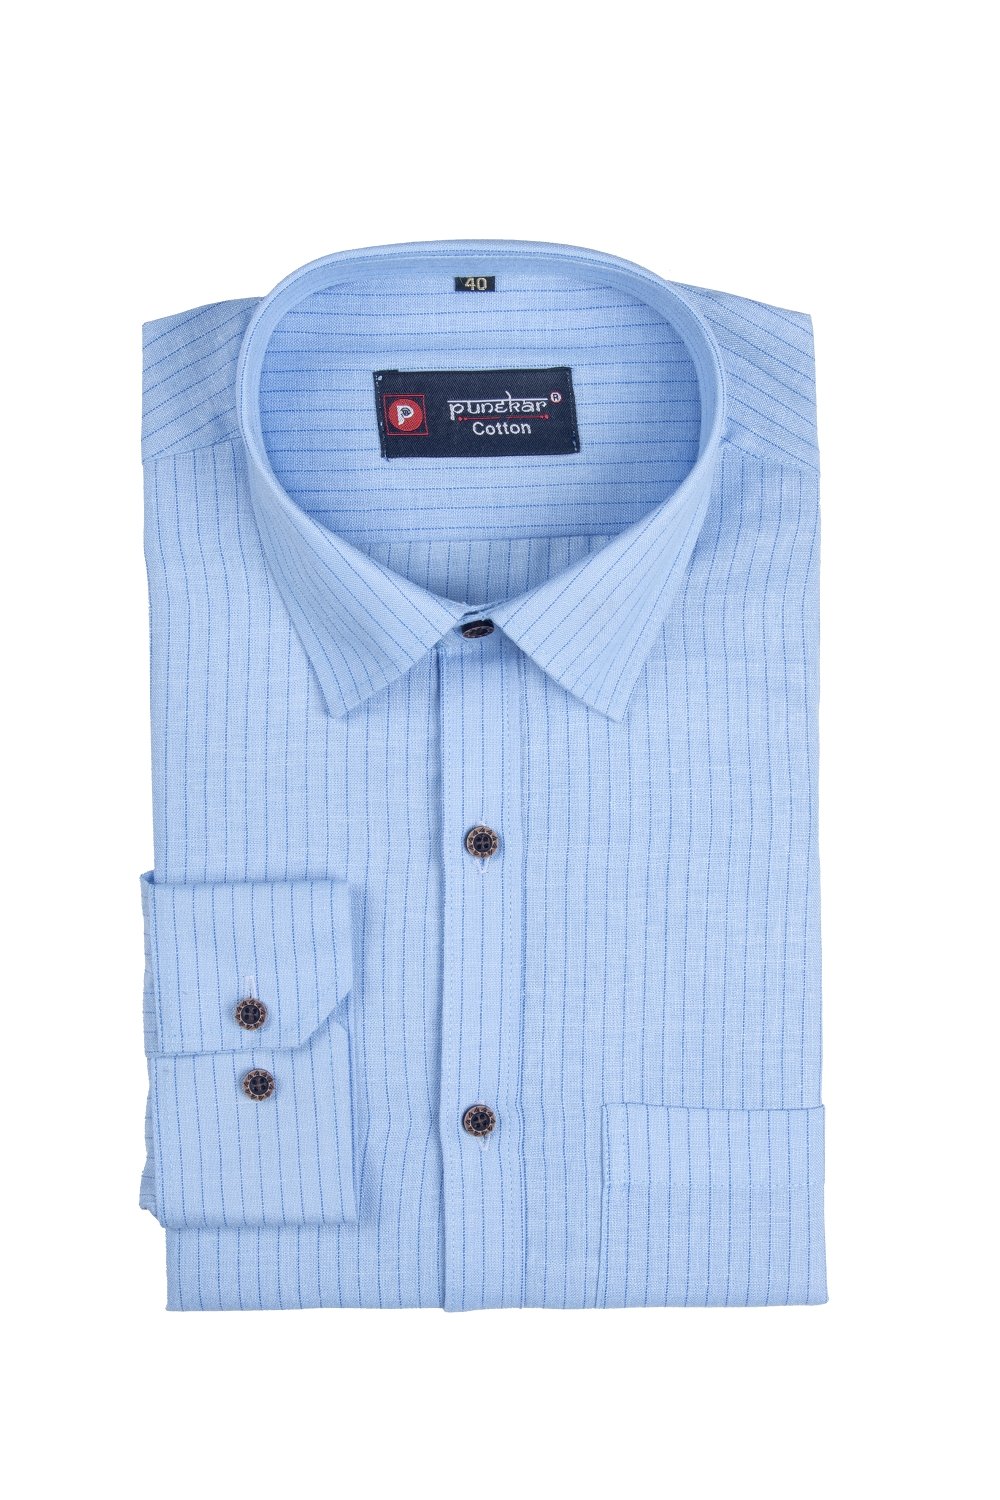 Punekar Cotton Light Blue Color Linning Criss Cross Woven Cotton Shirt for Men's. - Punekar Cotton